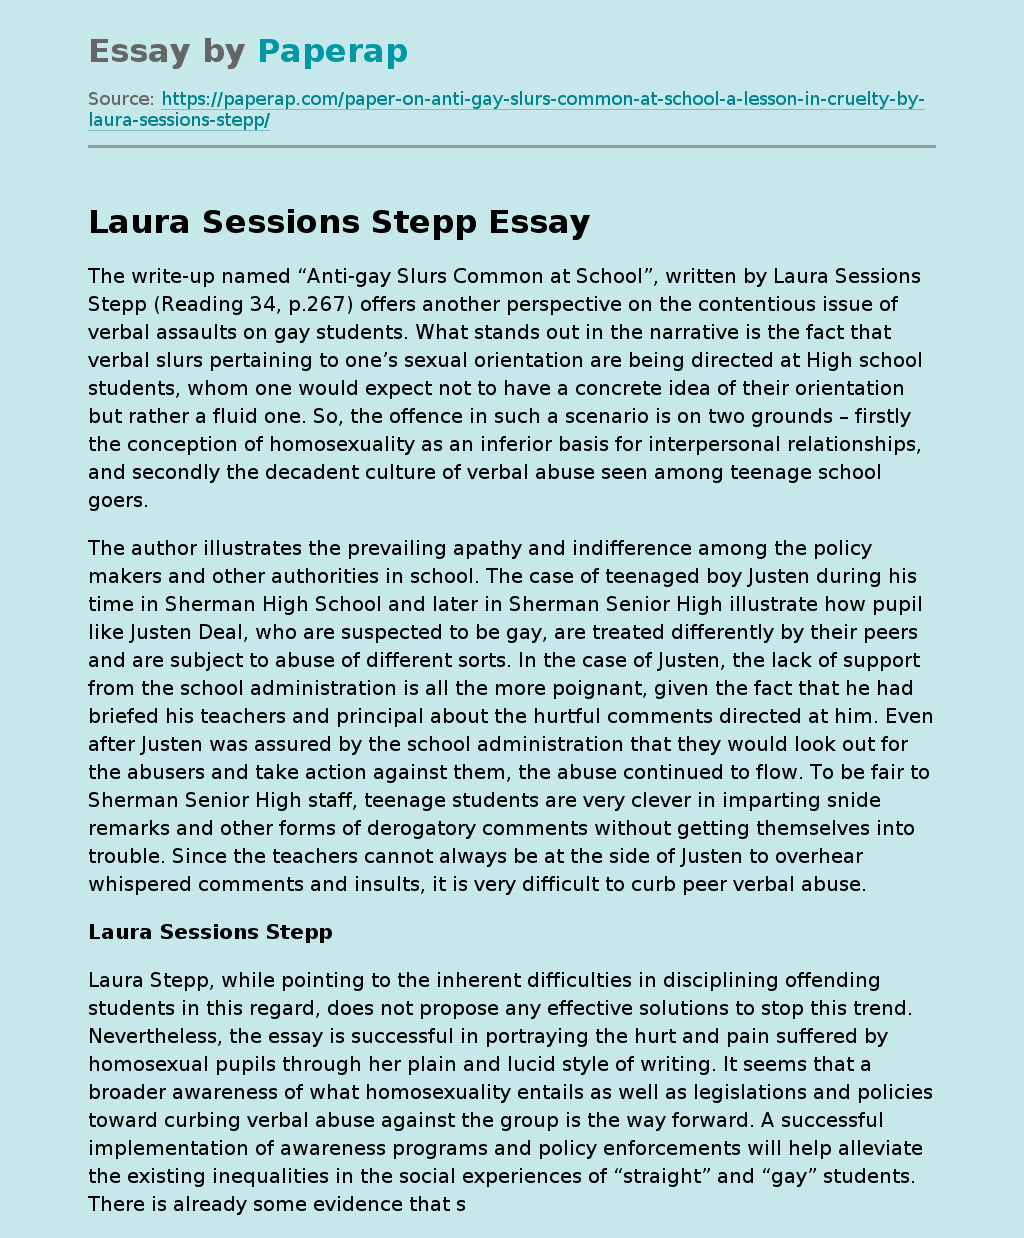 Laura Sessions Stepp